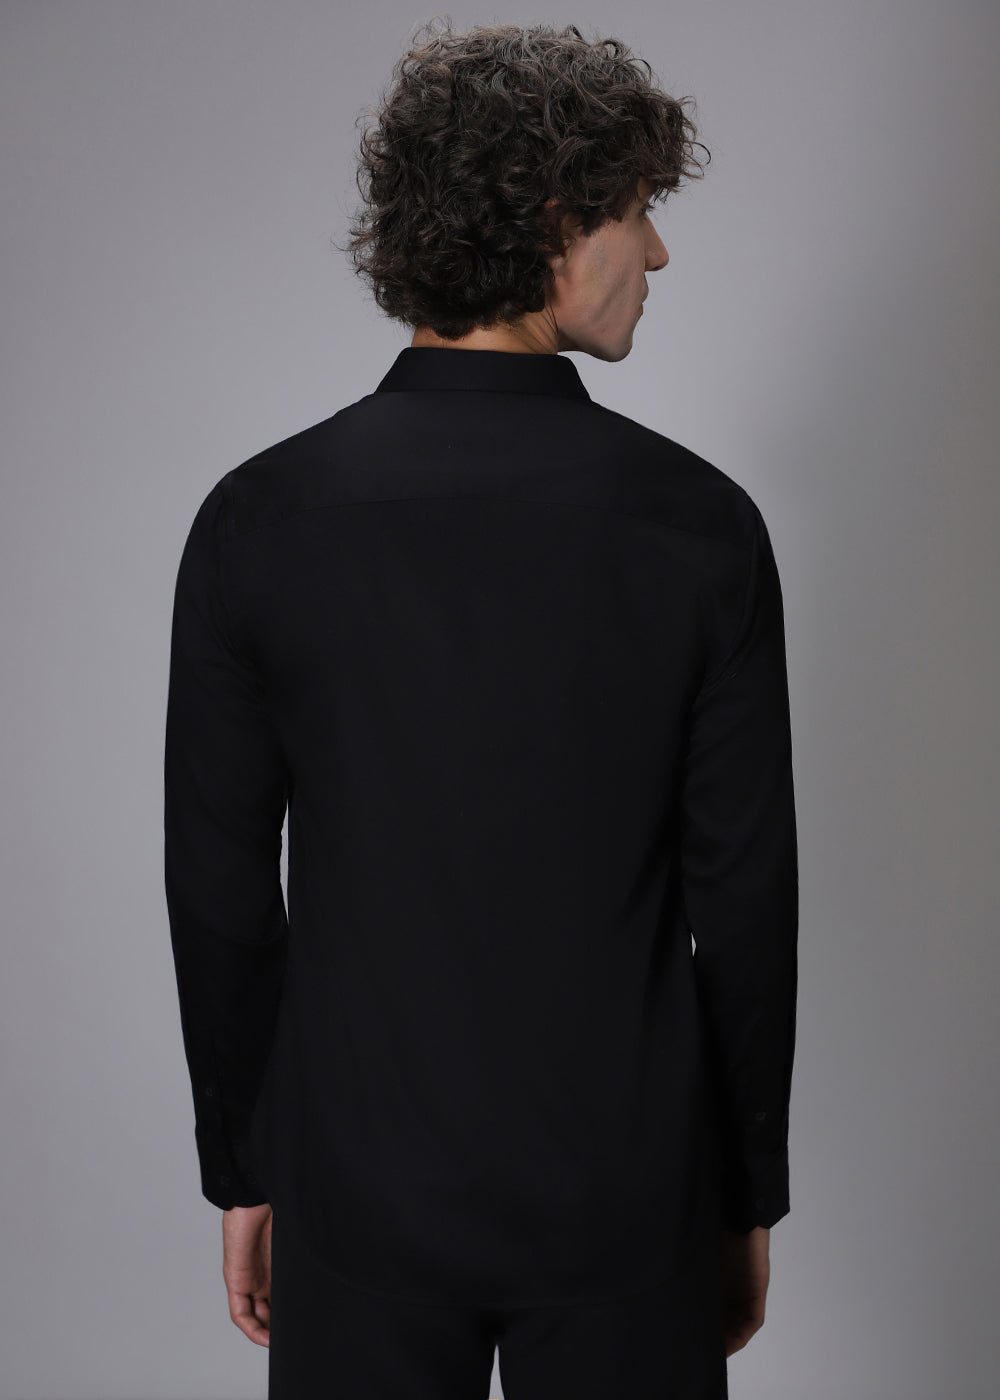 Flecked Sequenced Black Shirt